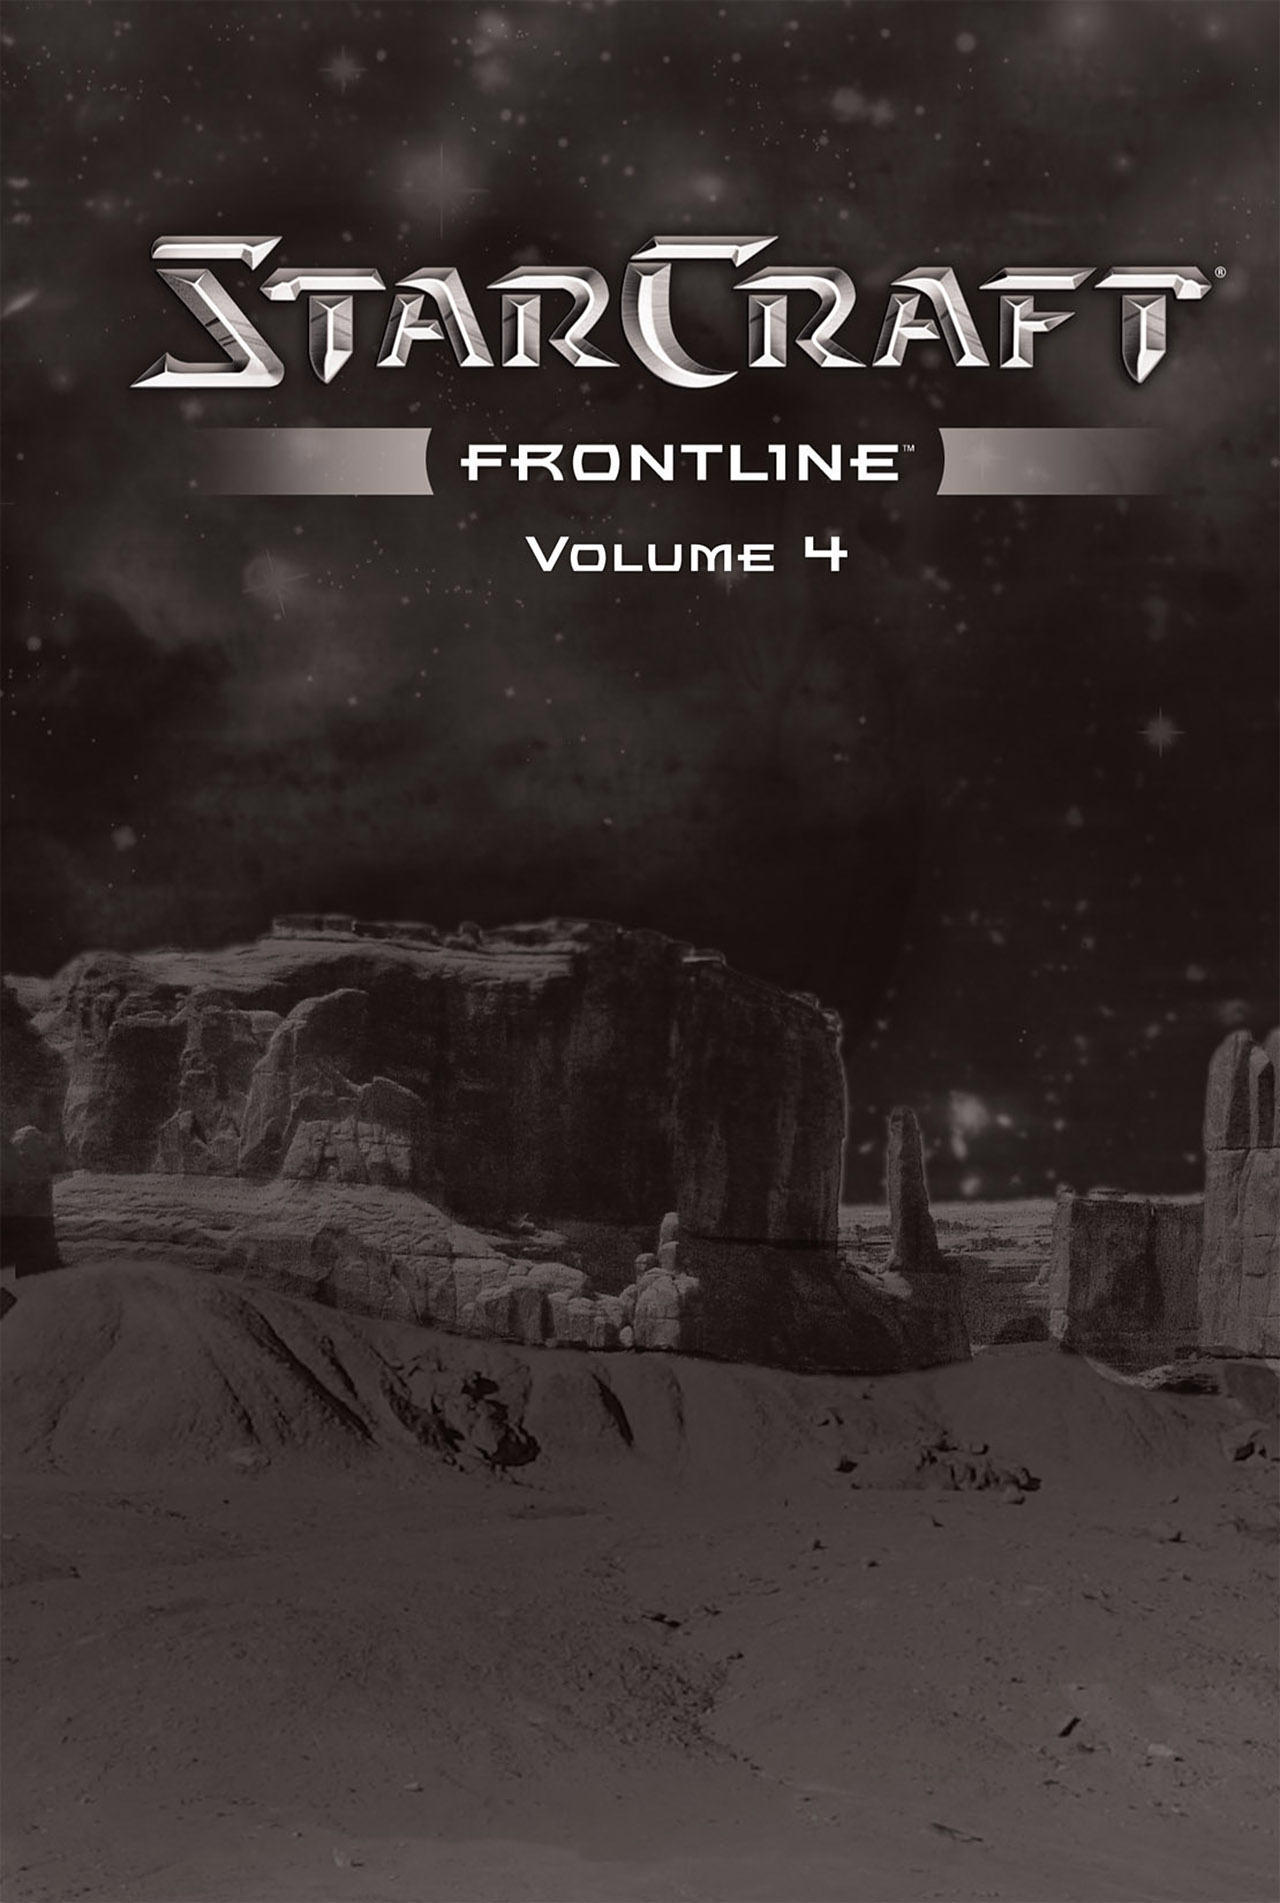 Read online StarCraft: Frontline comic -  Issue # TPB 4 - 4